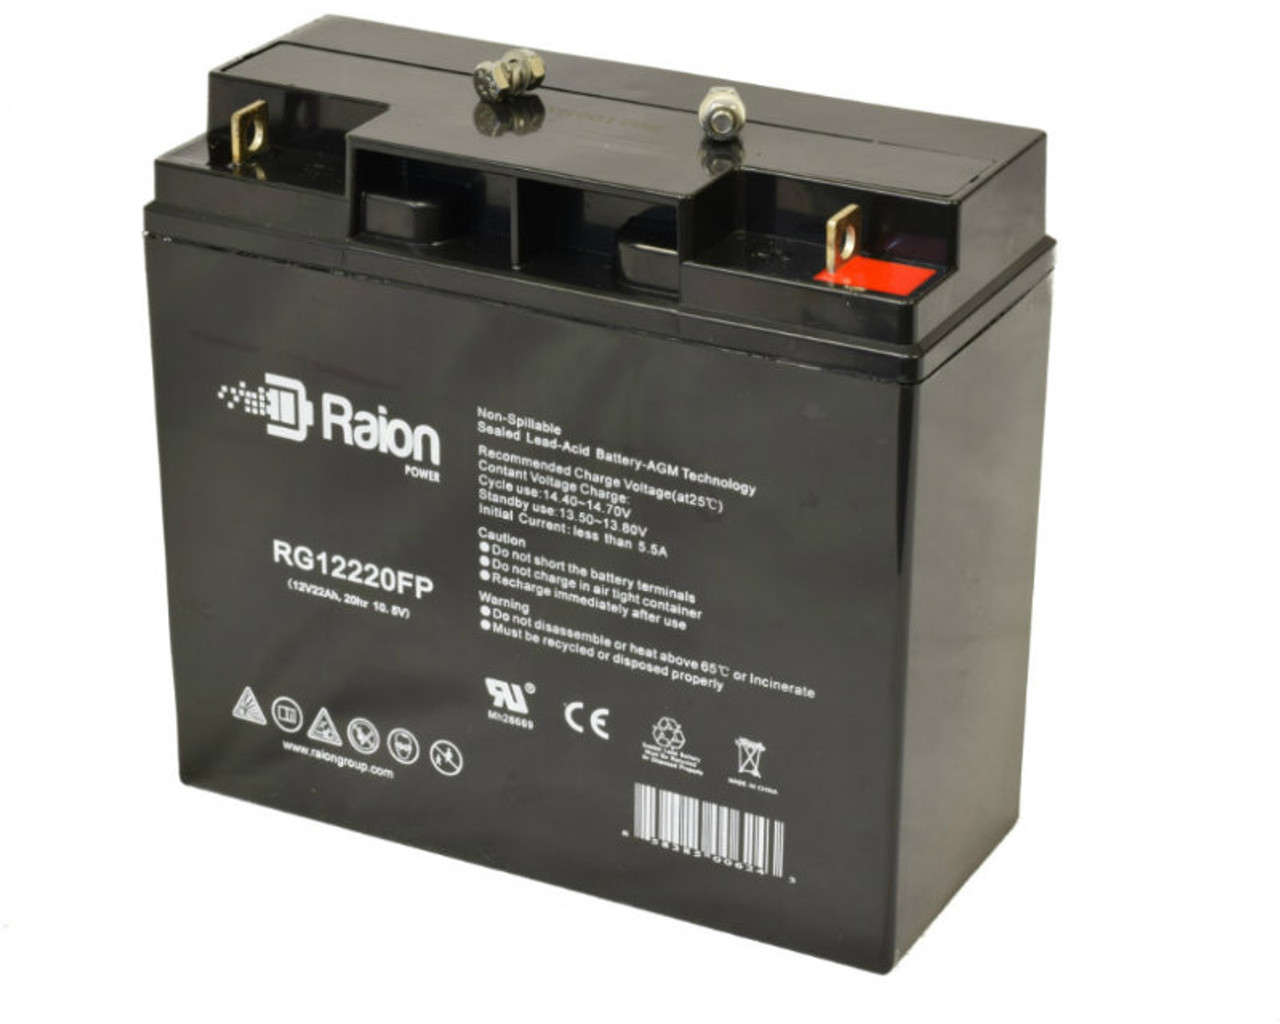 Raion Power RG12220FP 12V 22Ah Lead Acid Battery for Clore Automotive J900 Jump Starter